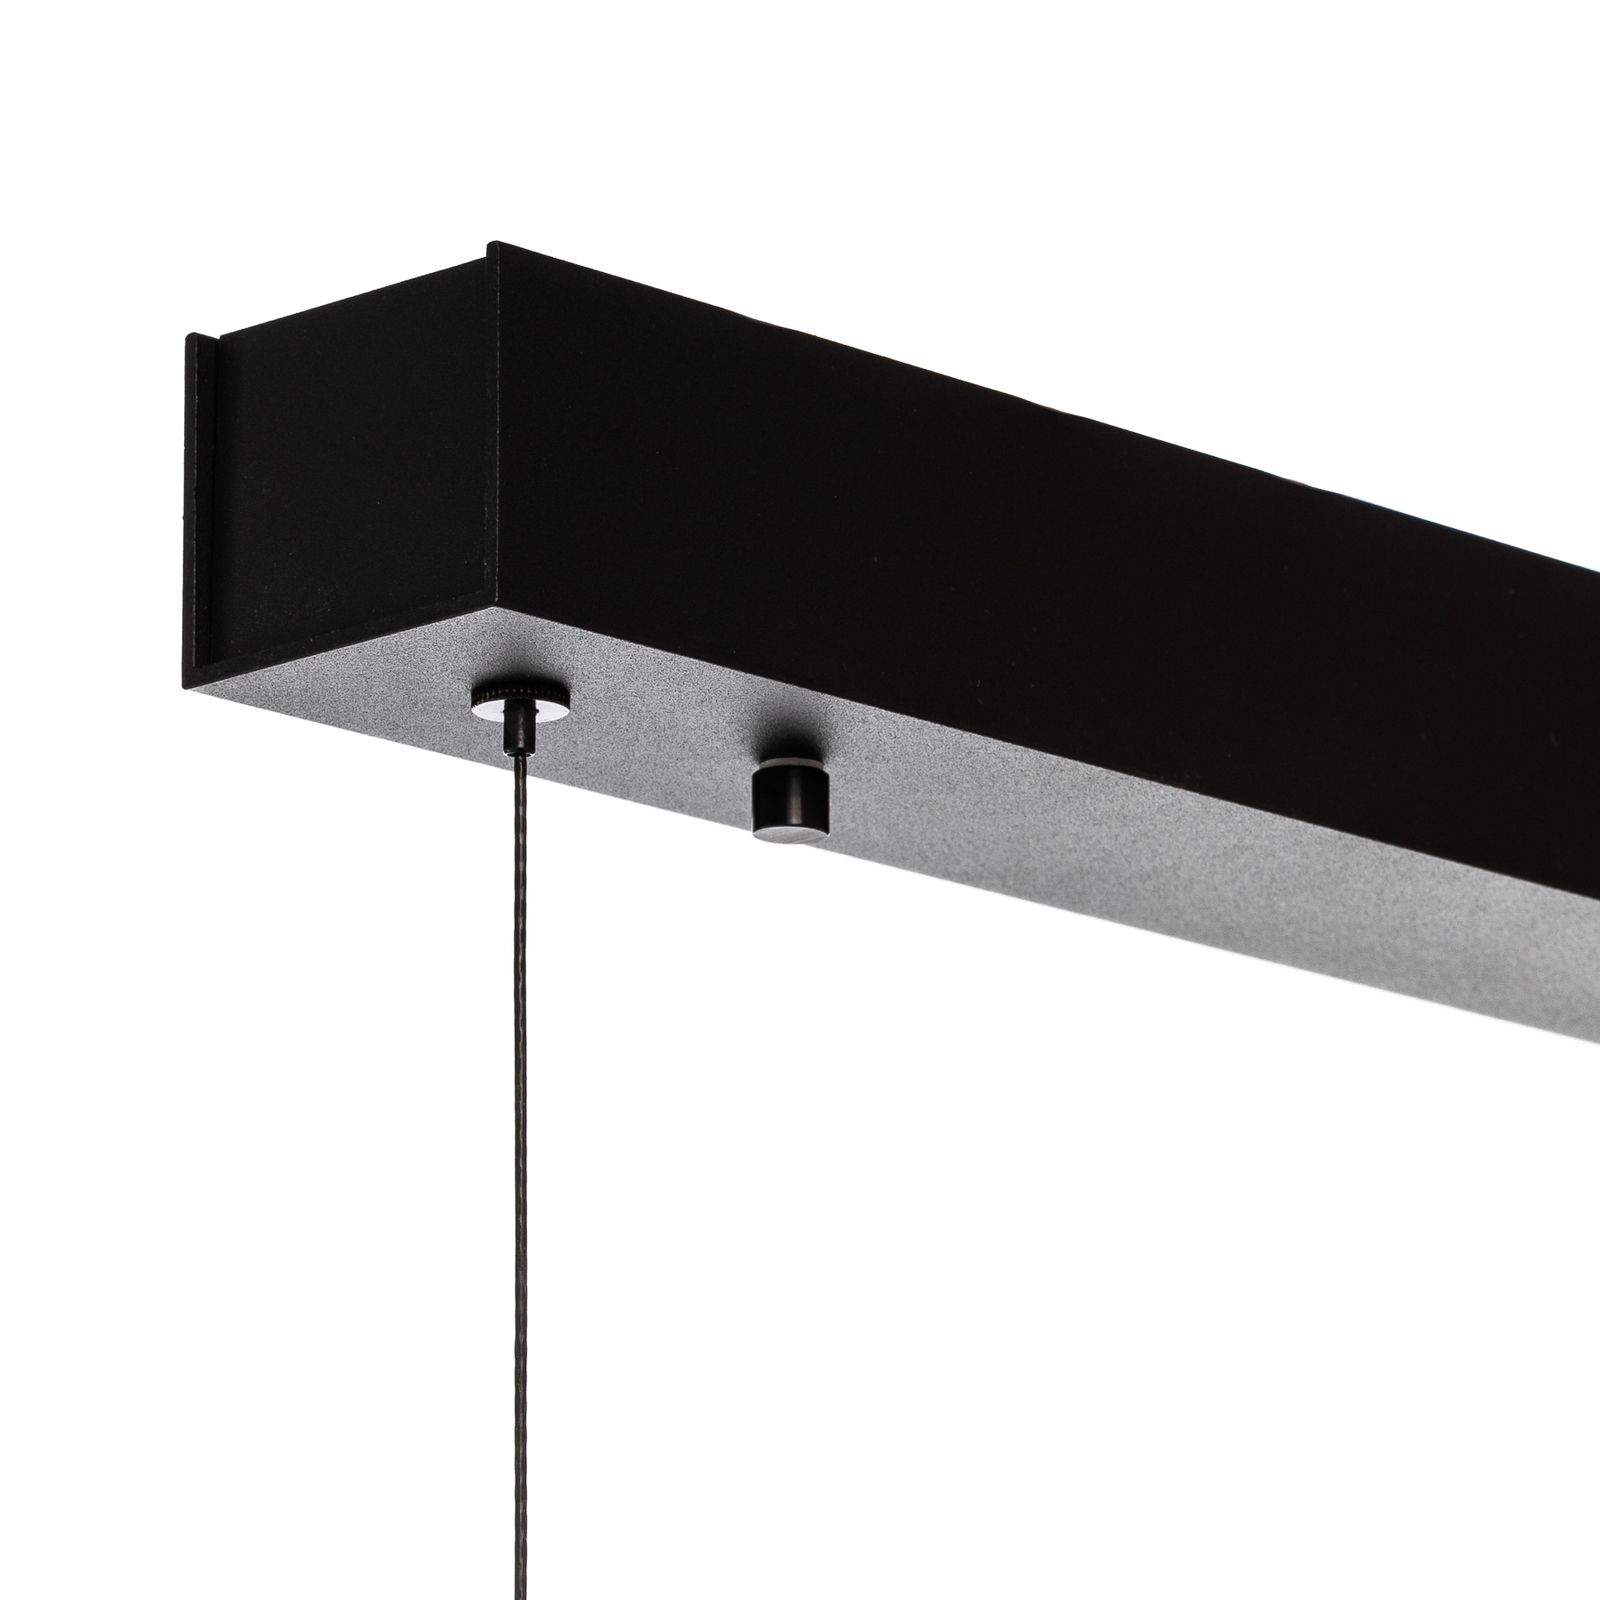 Quitani Kiera LED viseća lampa, hrast/crna, 98 cm